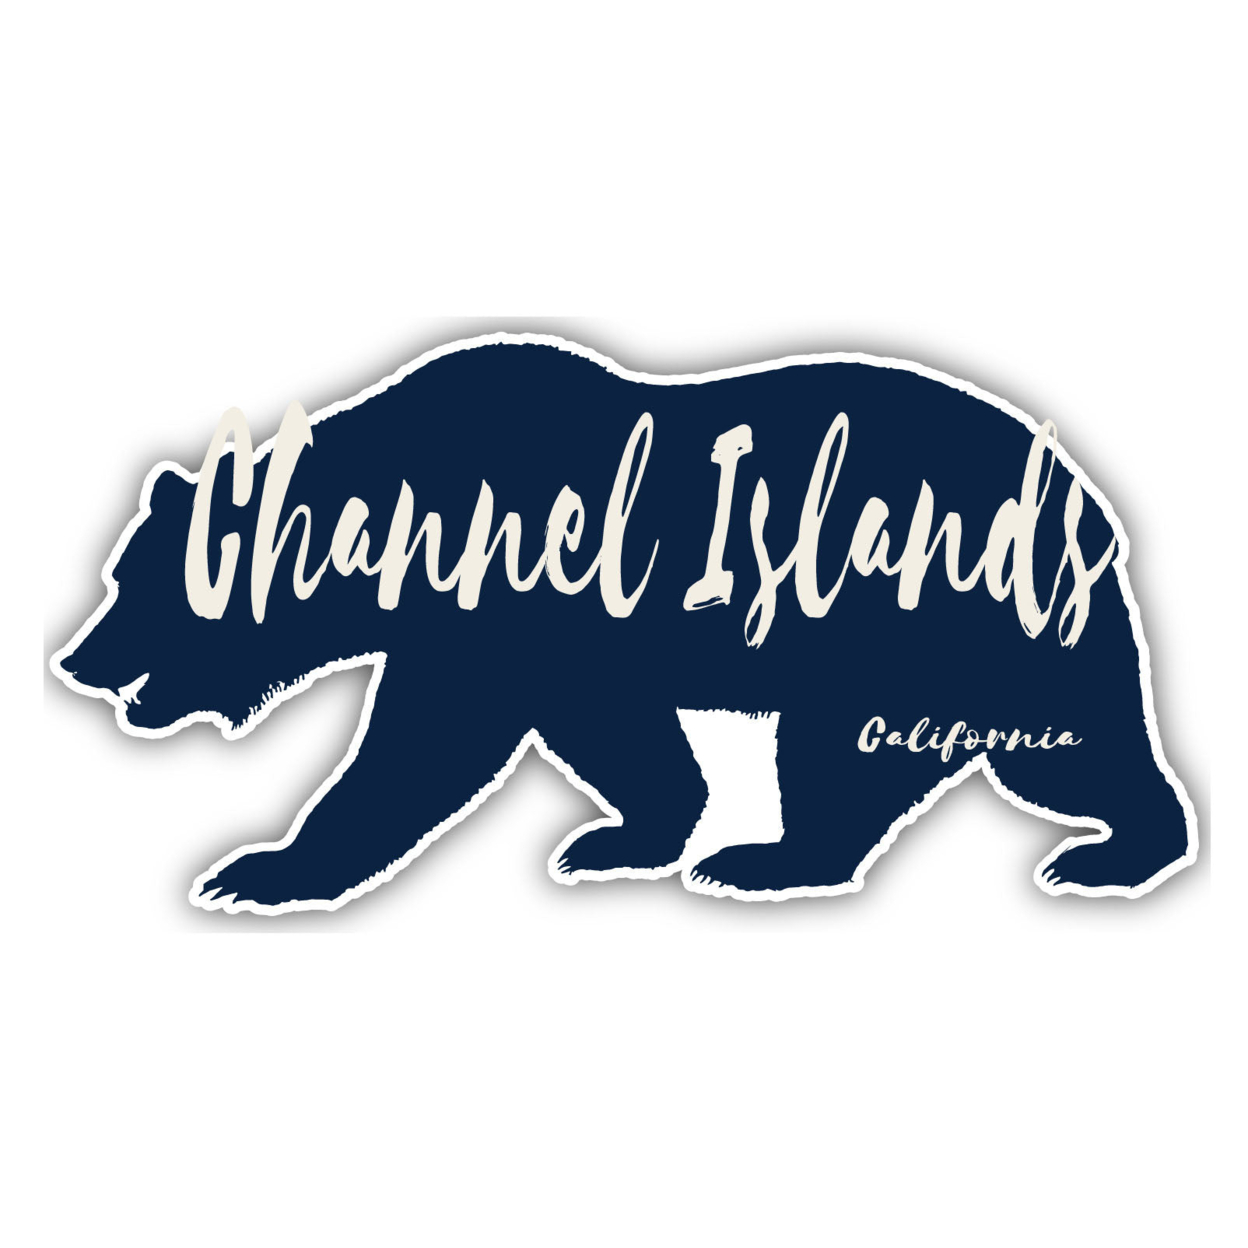 Channel Islands California Souvenir Decorative Stickers (Choose Theme And Size) - Single Unit, 6-Inch, Bear